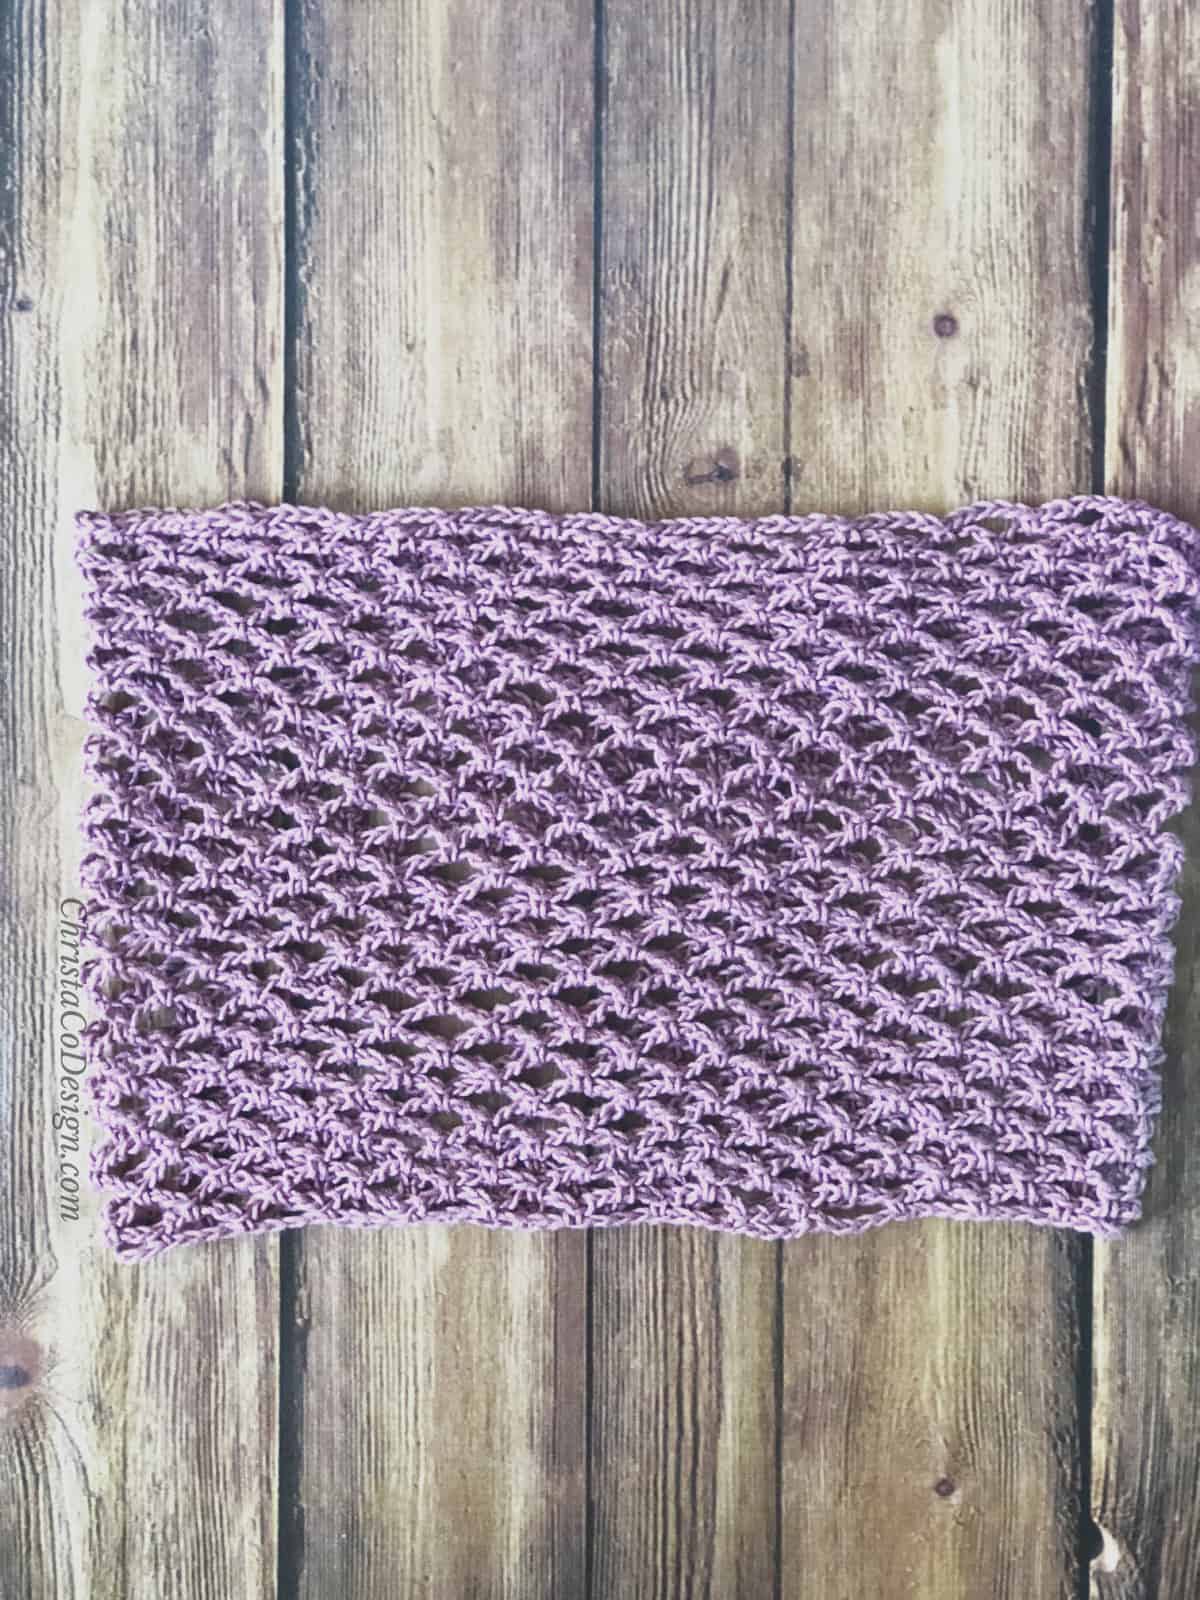 Lilac crochet cotton cowl pattern laid flat on wood back drop.